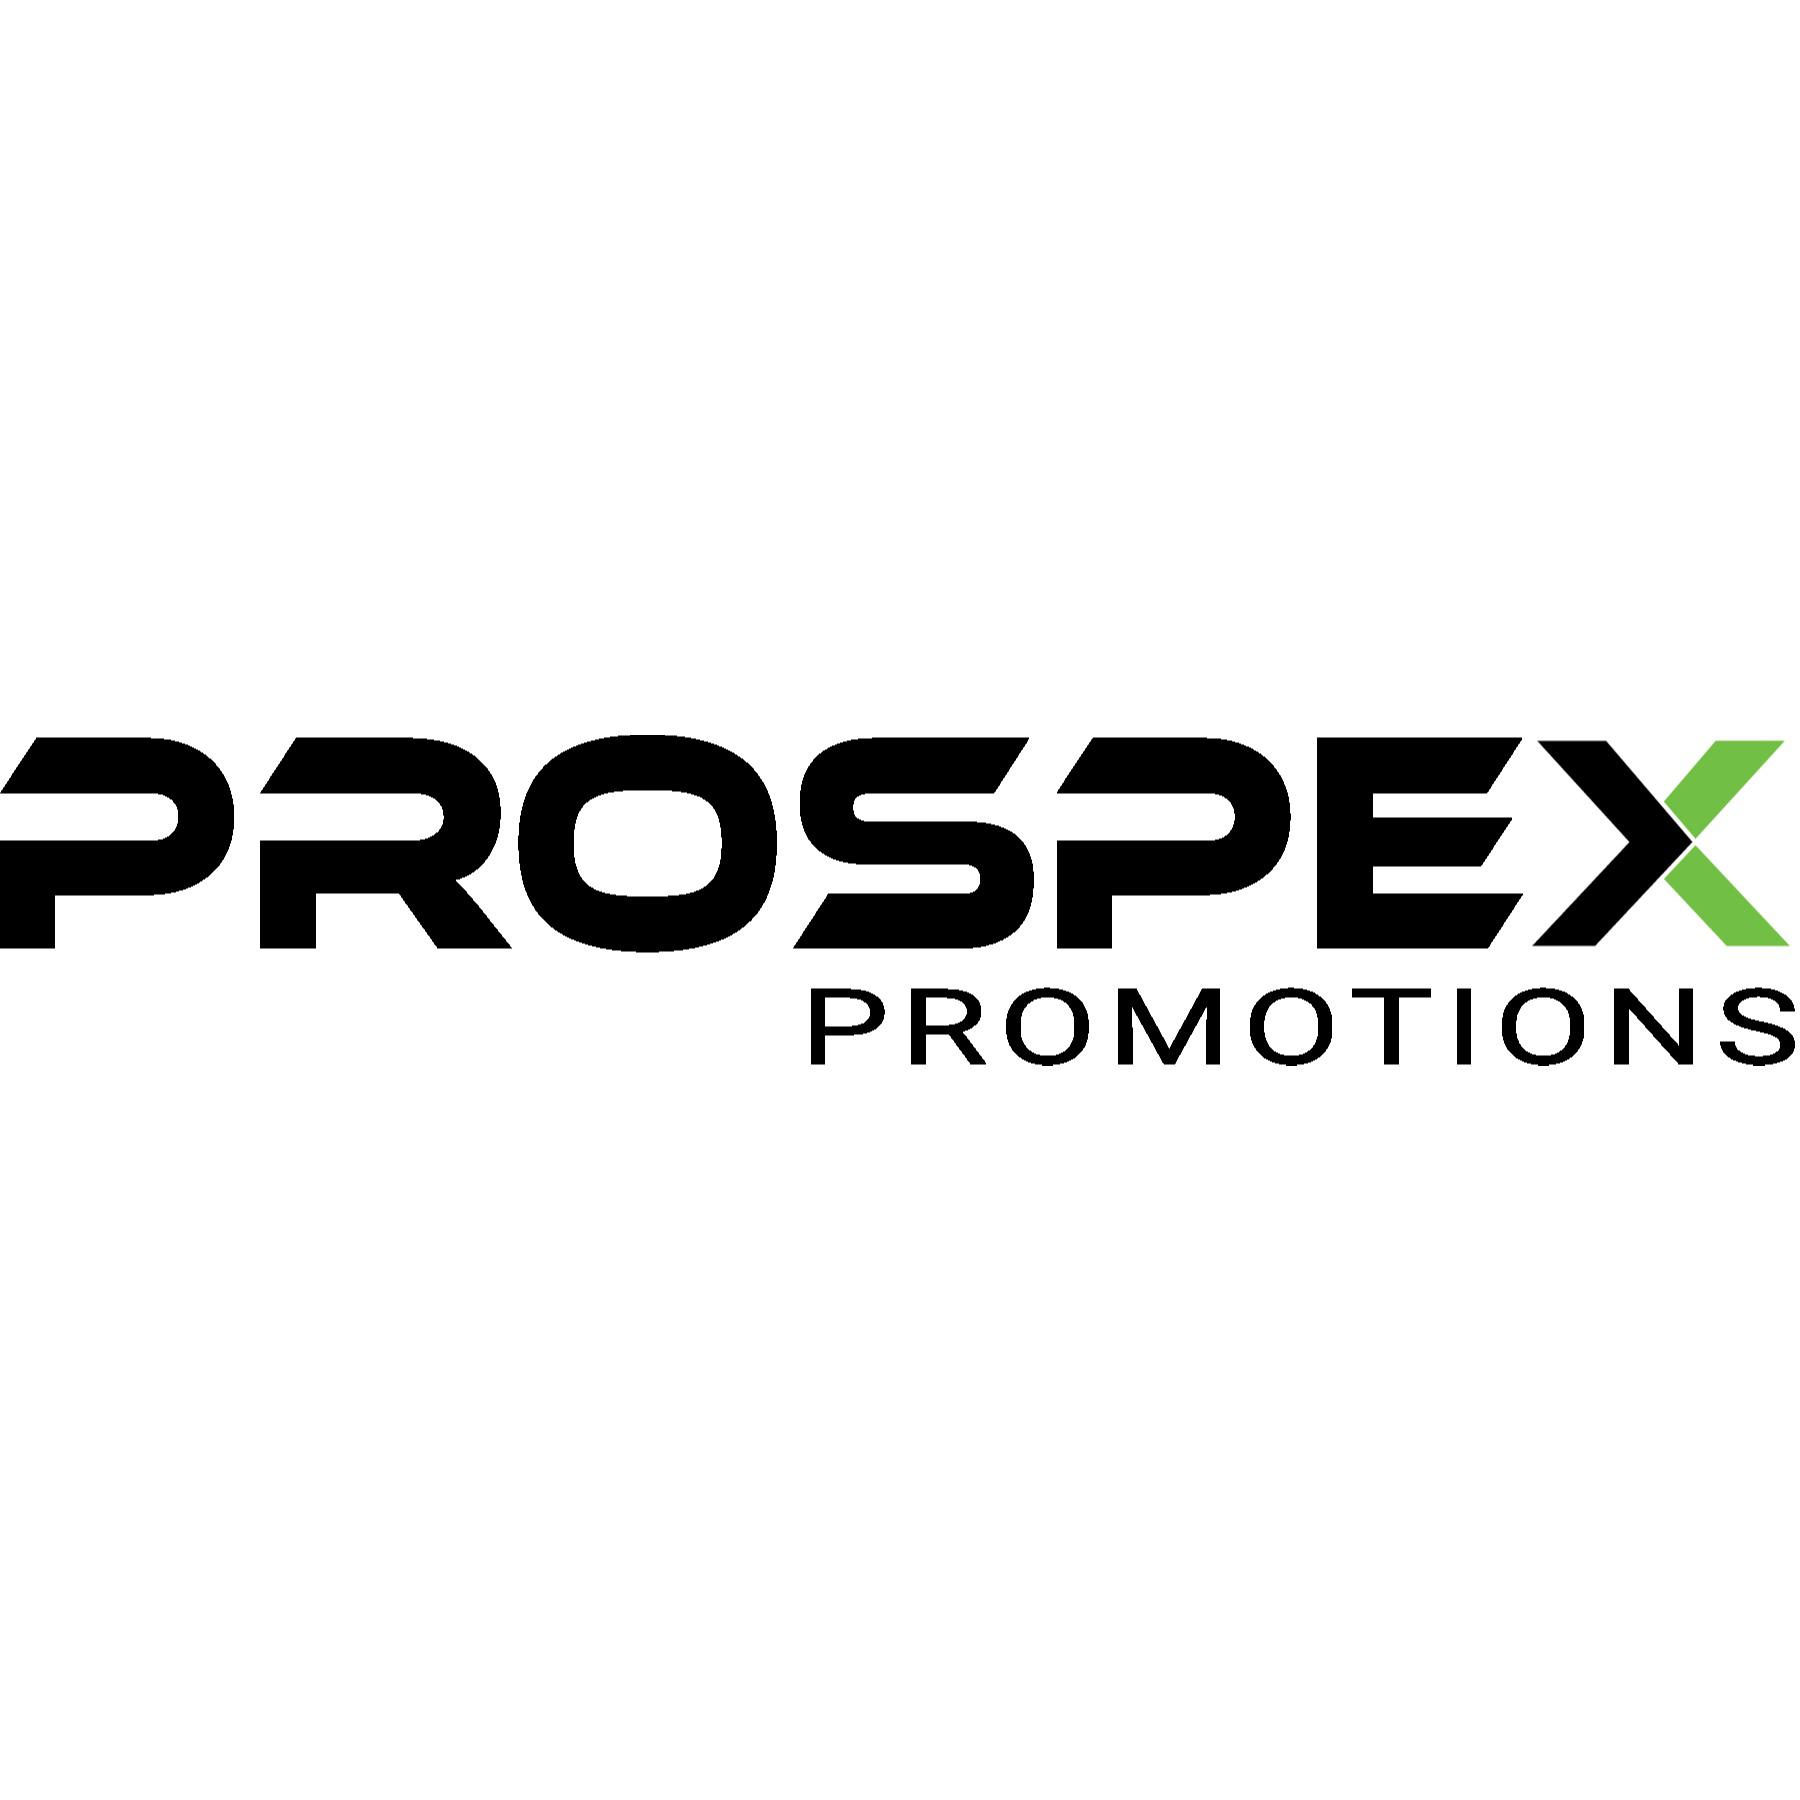 Prospex Promotions, Inc. - Moultrie, GA 31768 - (229)985-9466 | ShowMeLocal.com